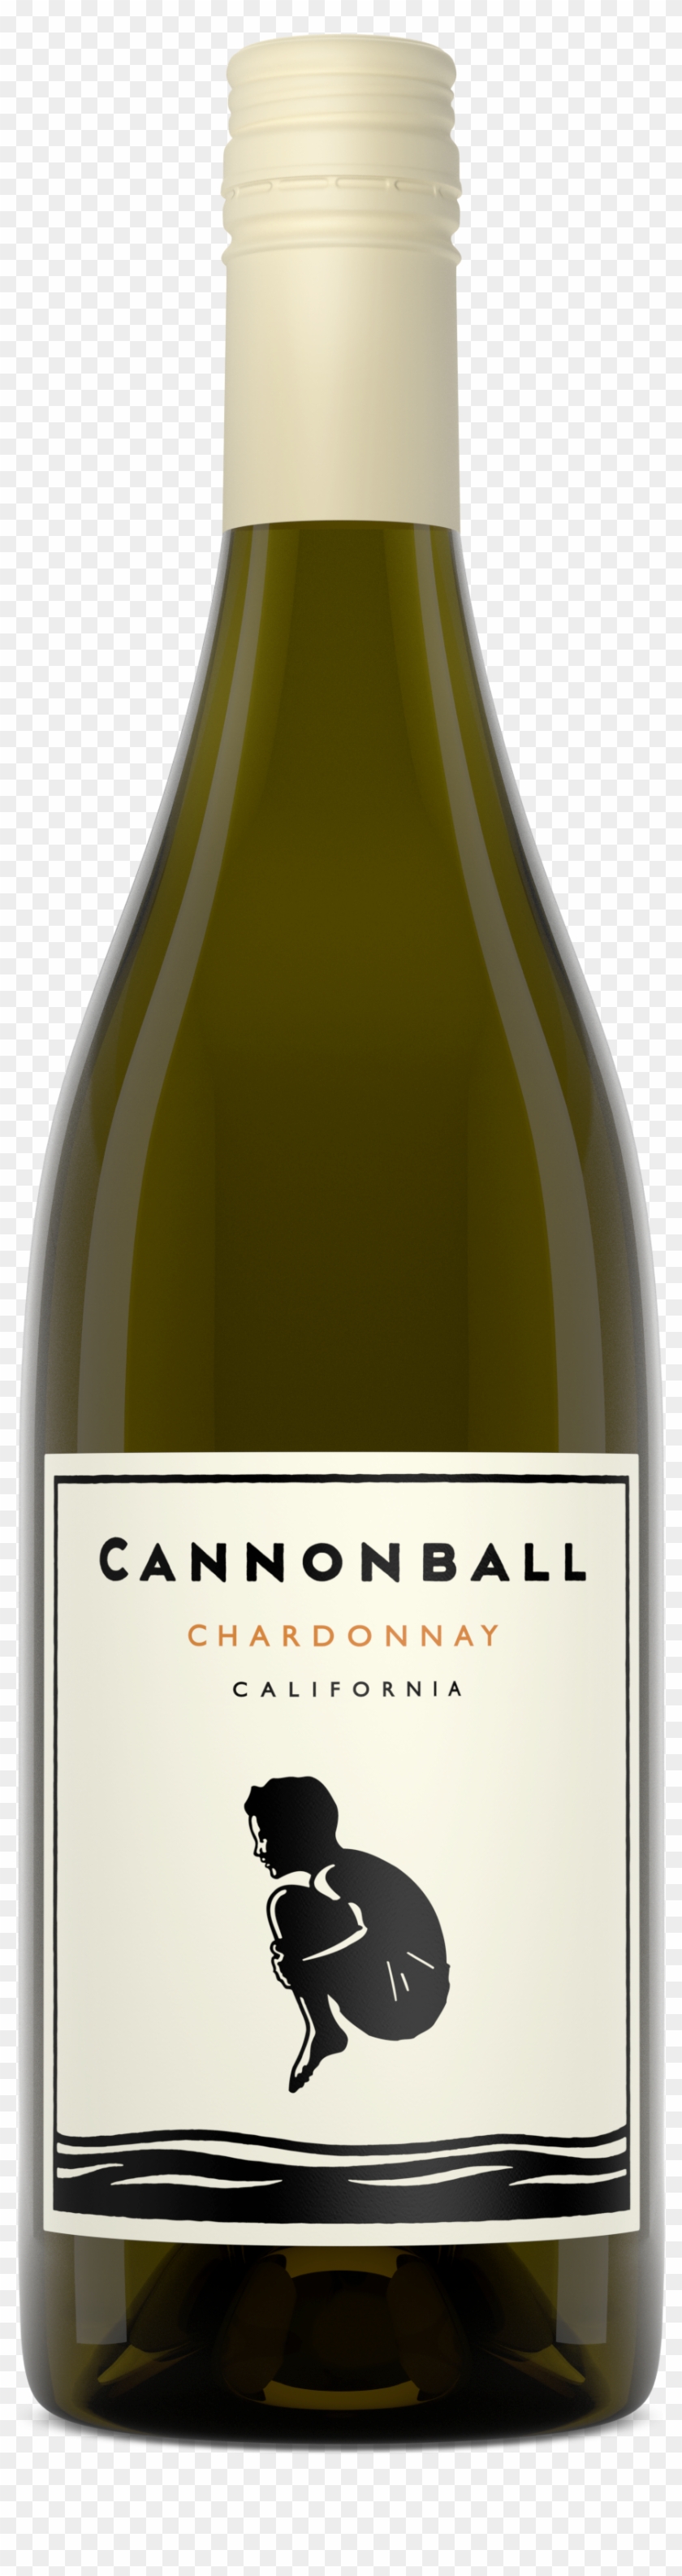 Cannonball Chardonnay - Cannonball Cabernet Sauvignon Clipart #4916661